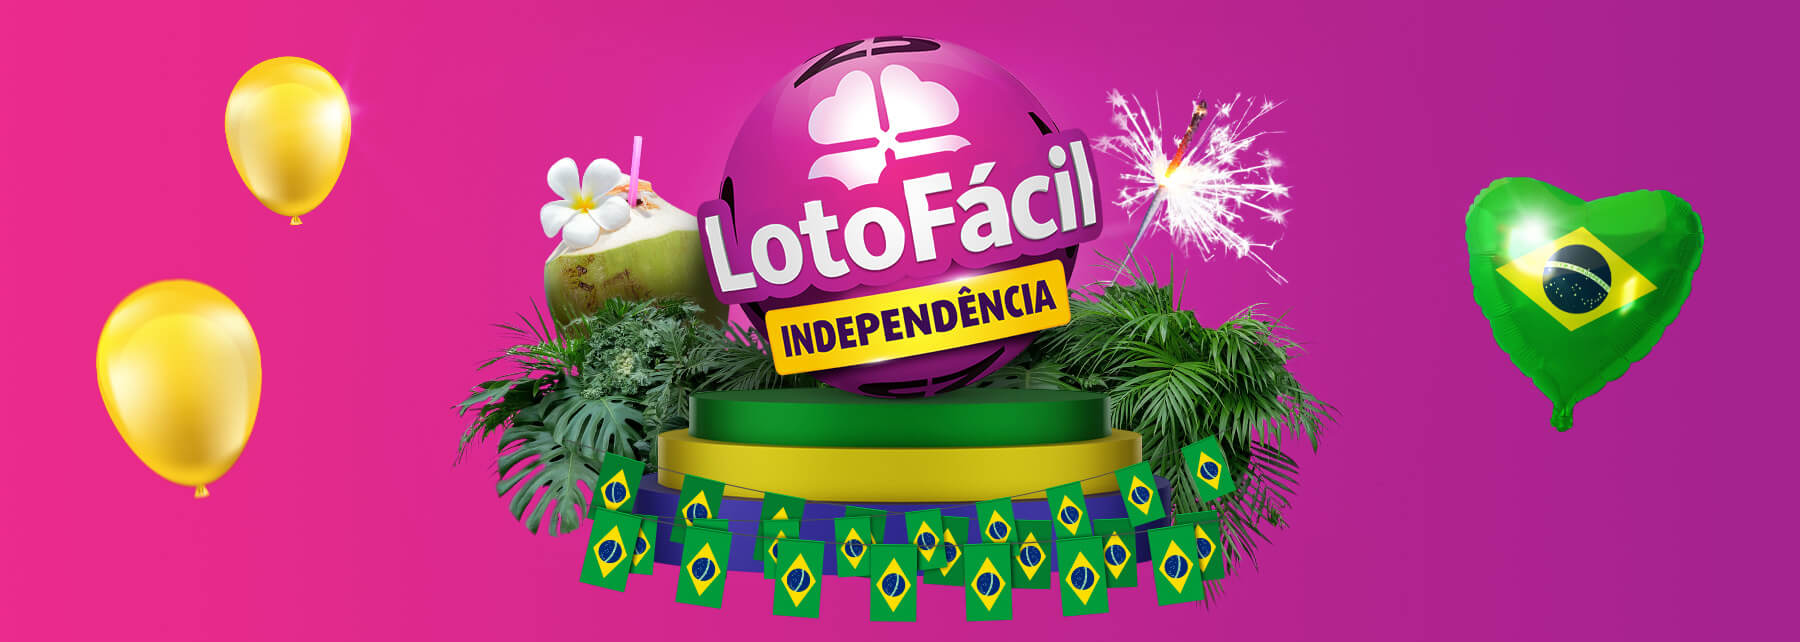 site da loteria federal lotofacil